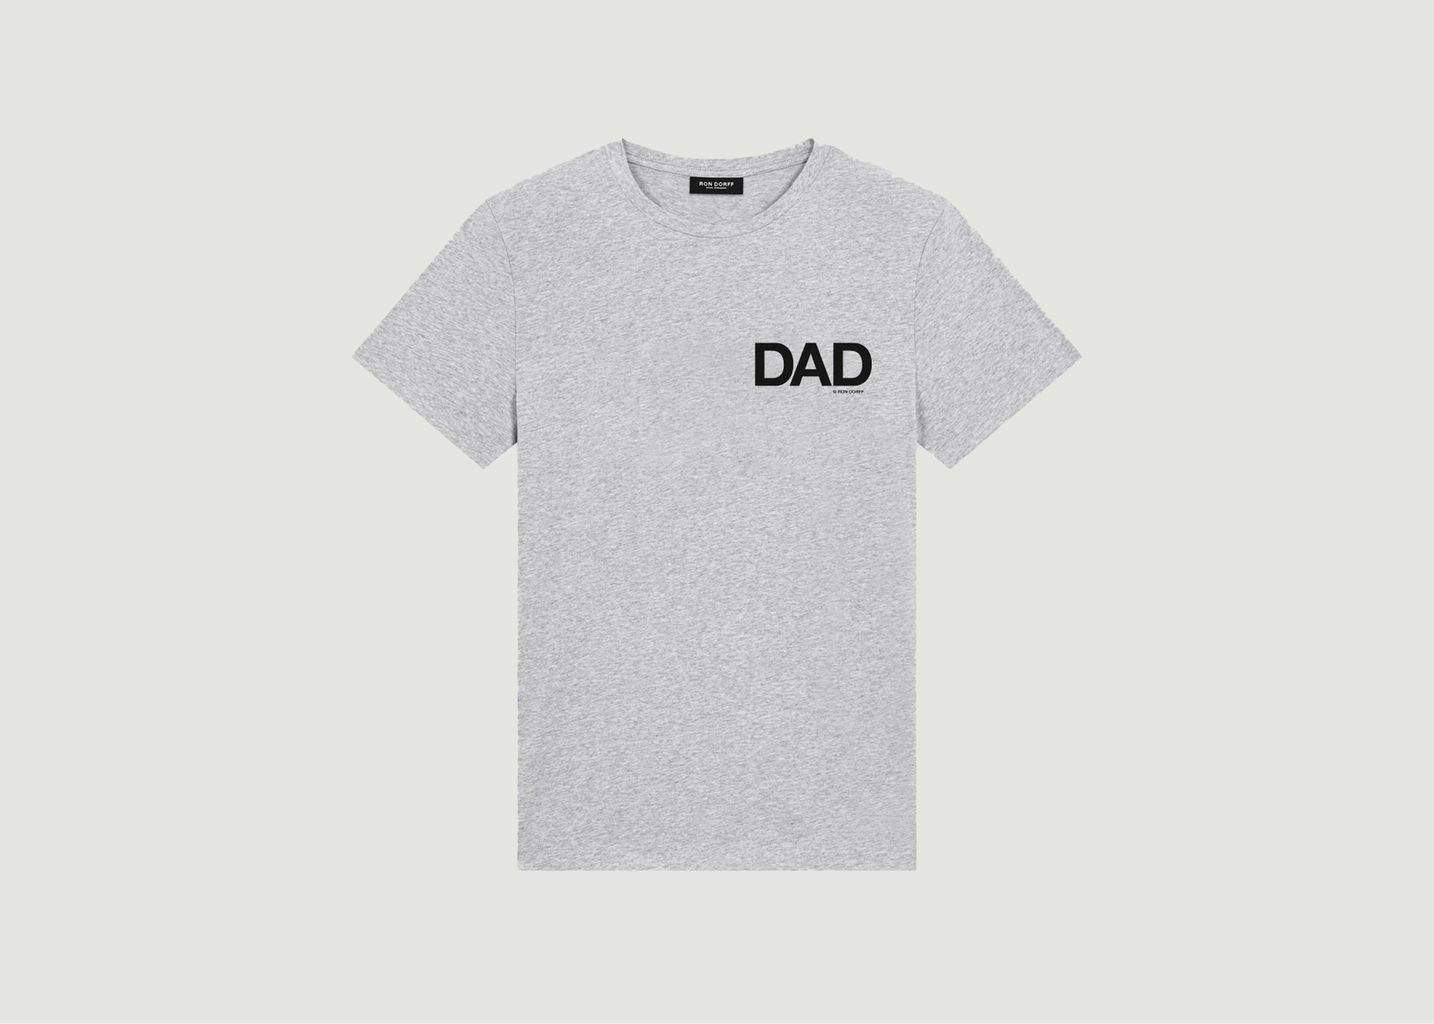 dad t-shirt  - Ron Dorff